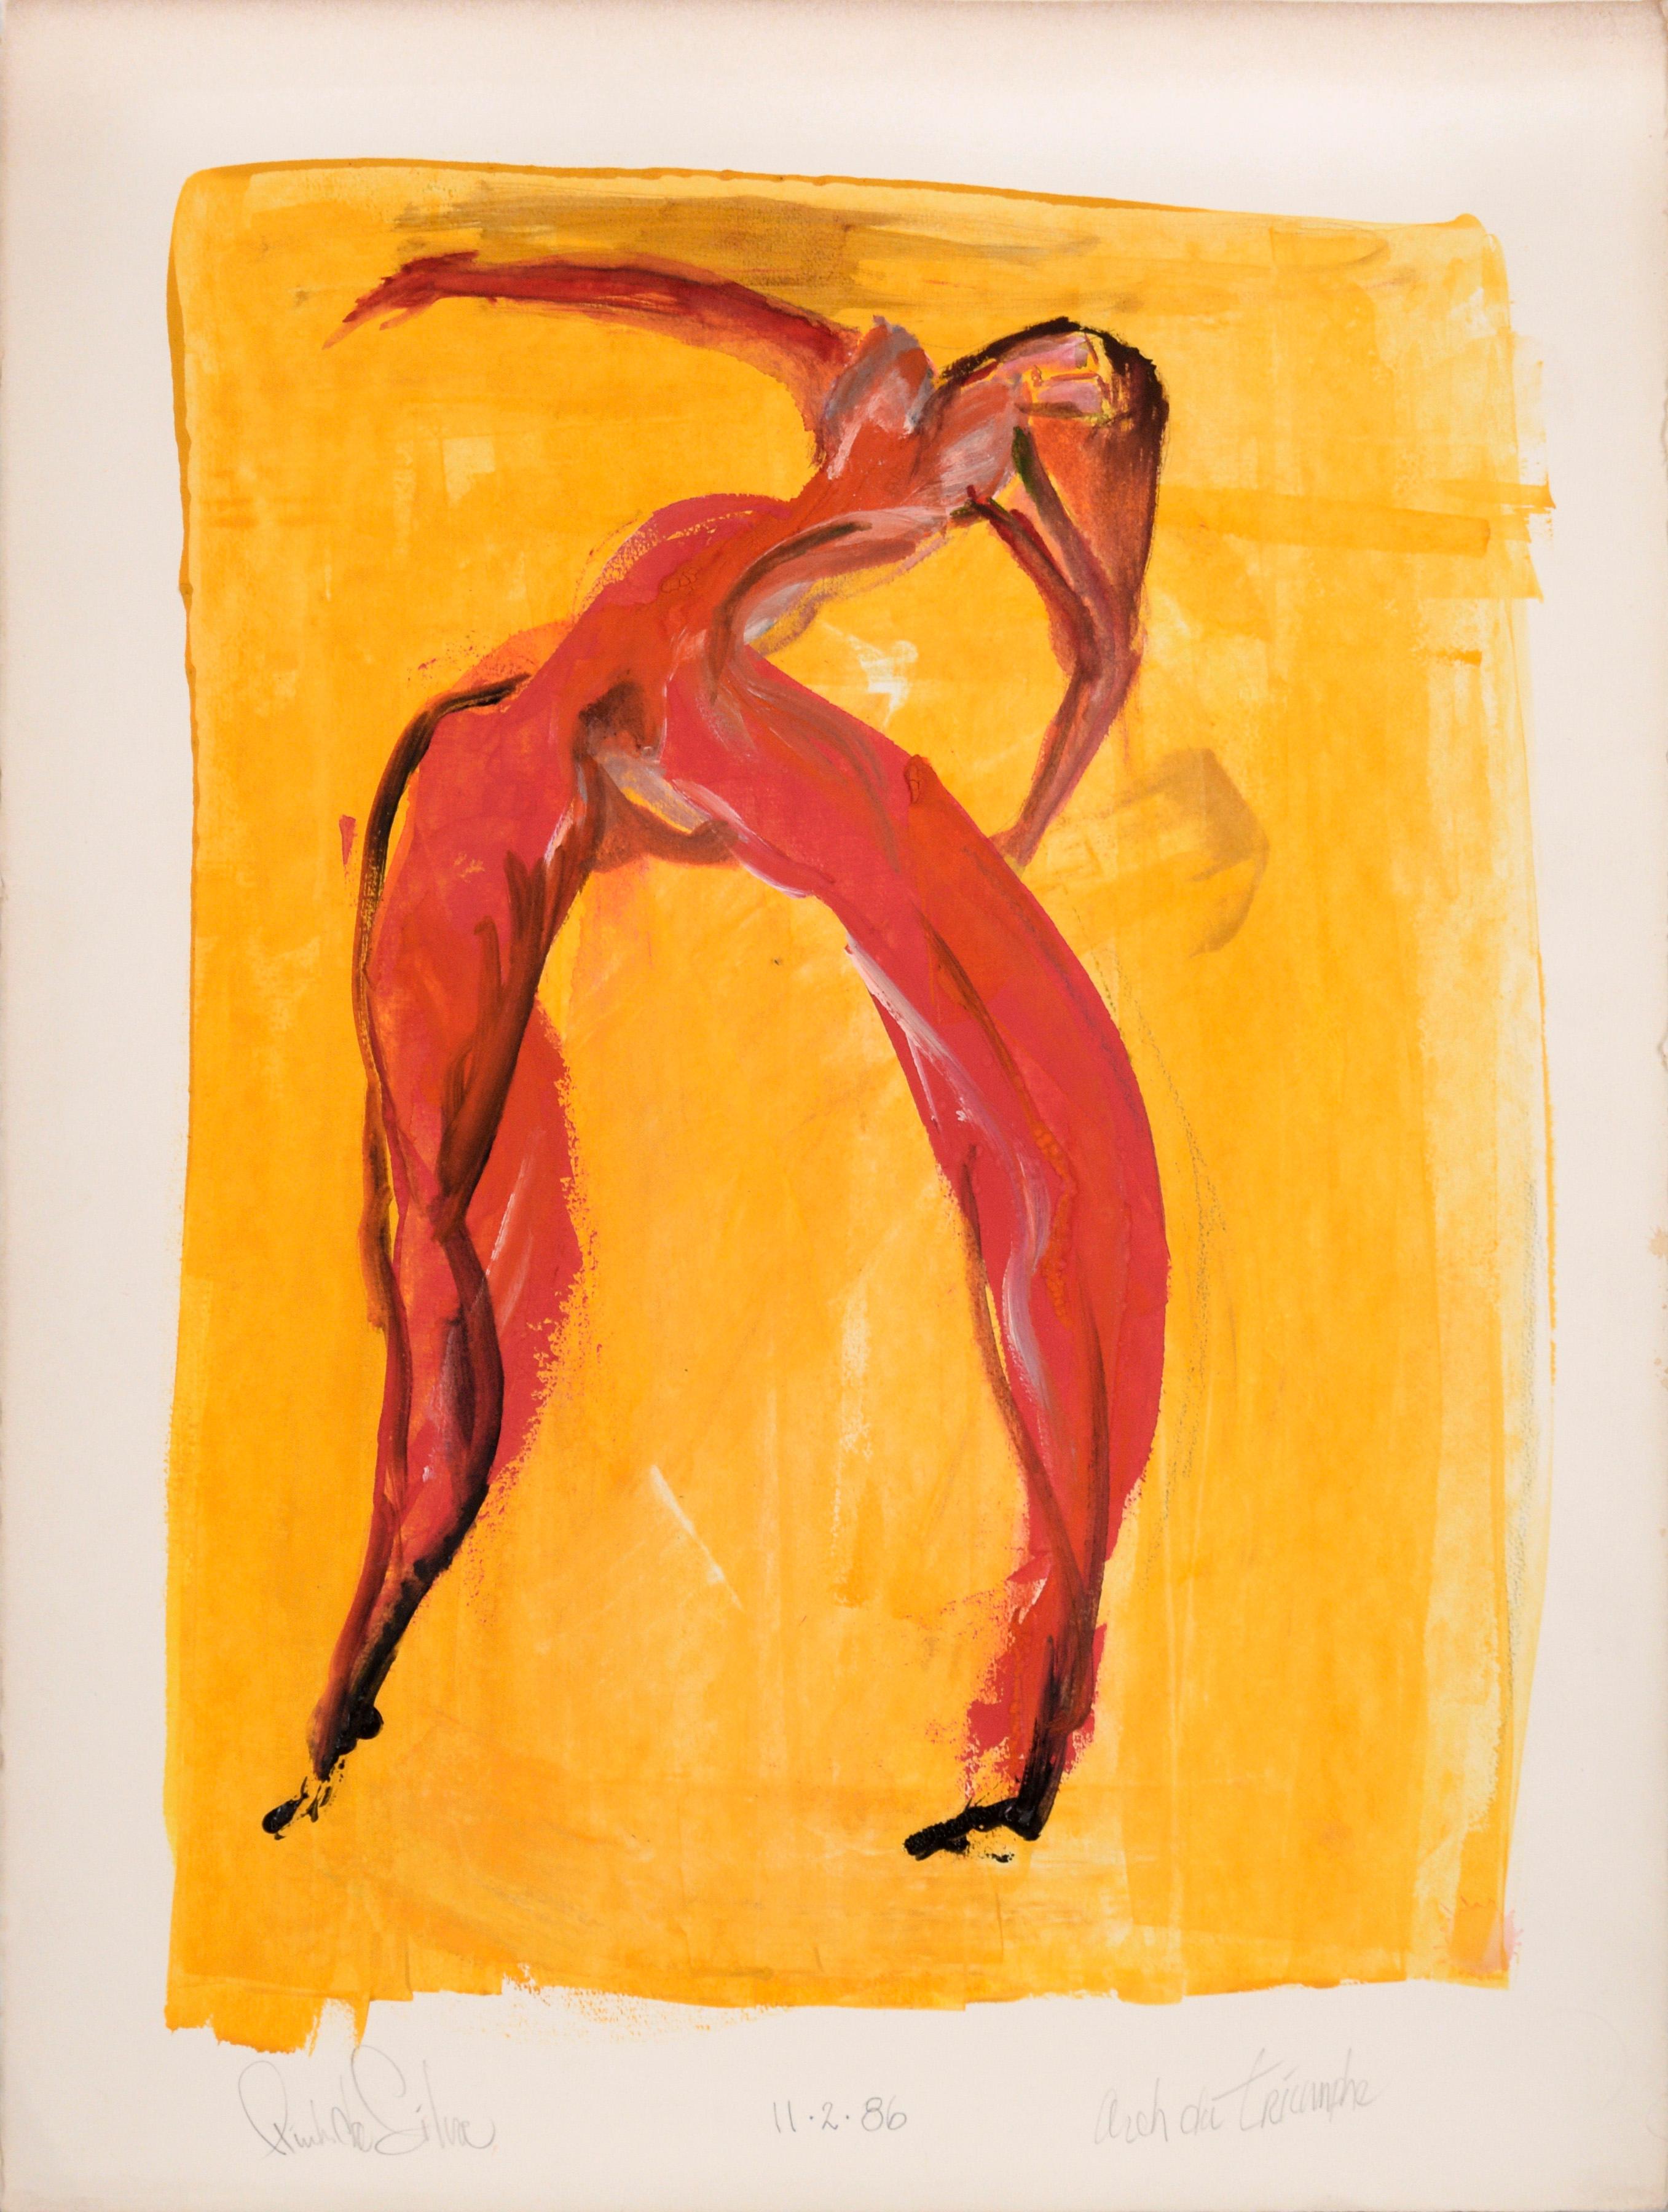 Ricardo de Silva Nude Painting - "Arch du Triumphe" Nude Figurative Composition in Acrylic on Heavy Arches Paper